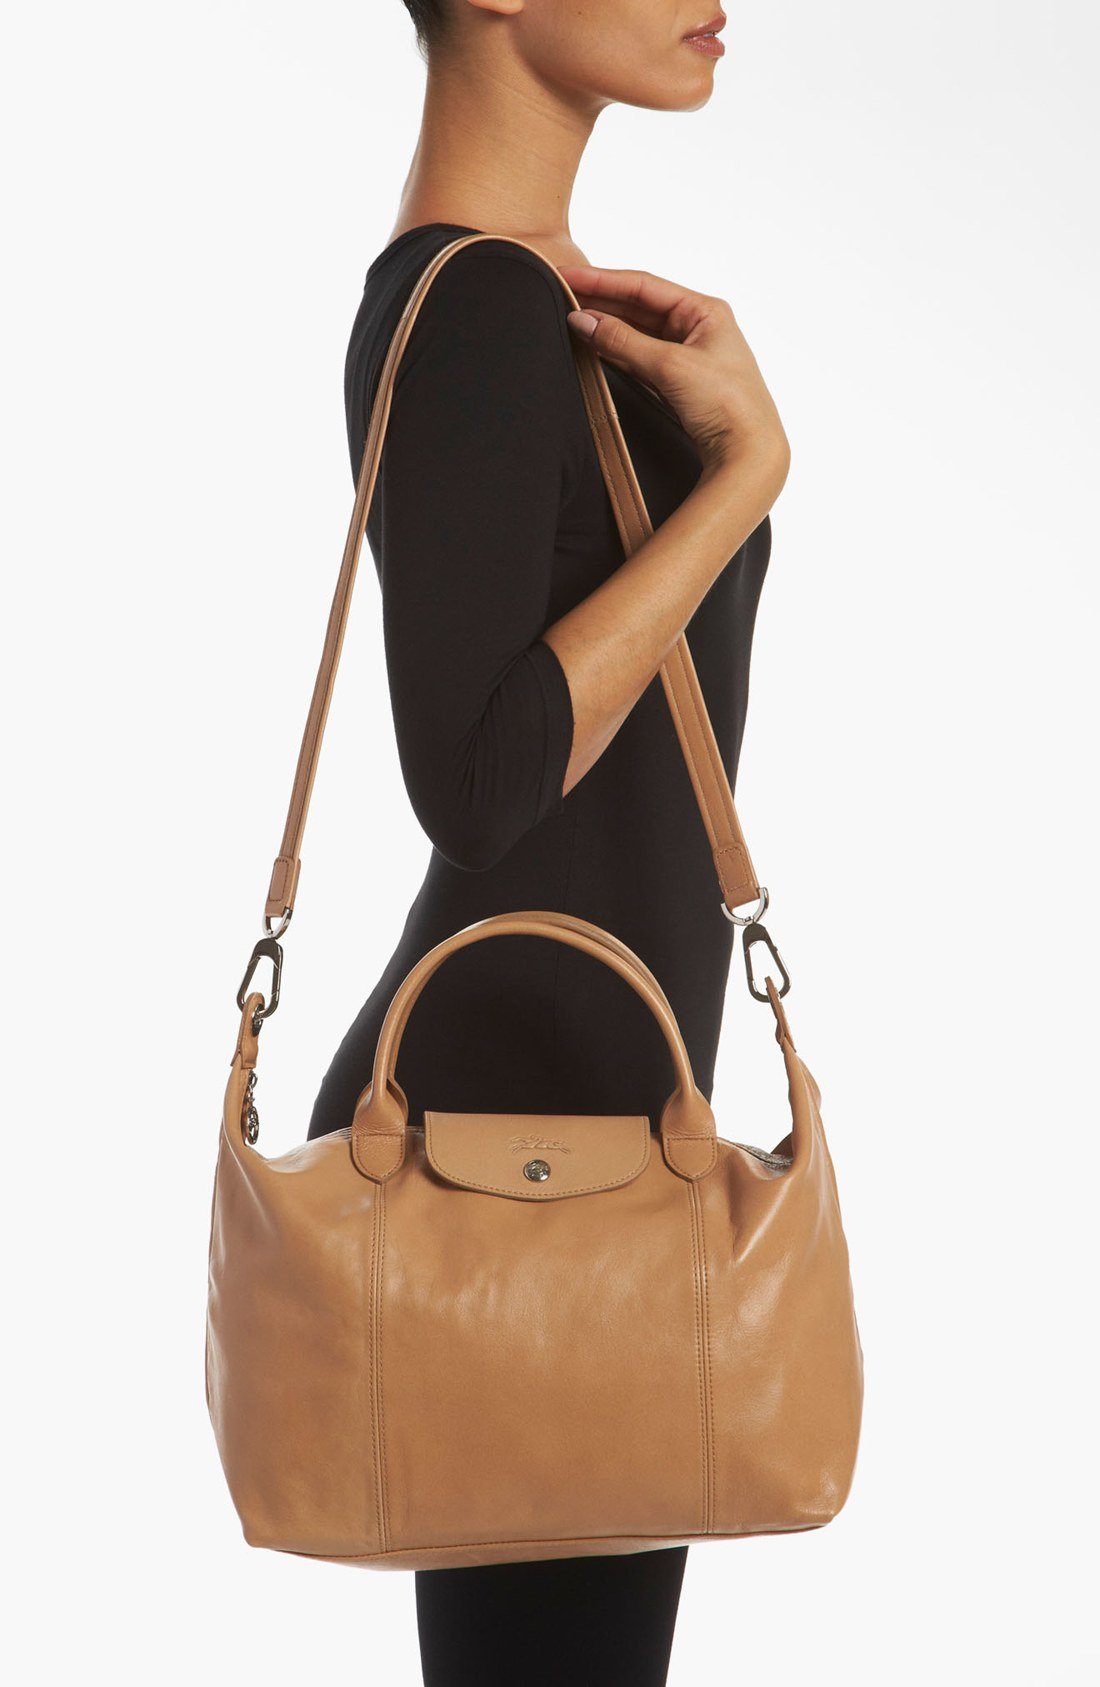 Longchamp 'le Pliage Cuir' Leather Handbag in Beige (start of color